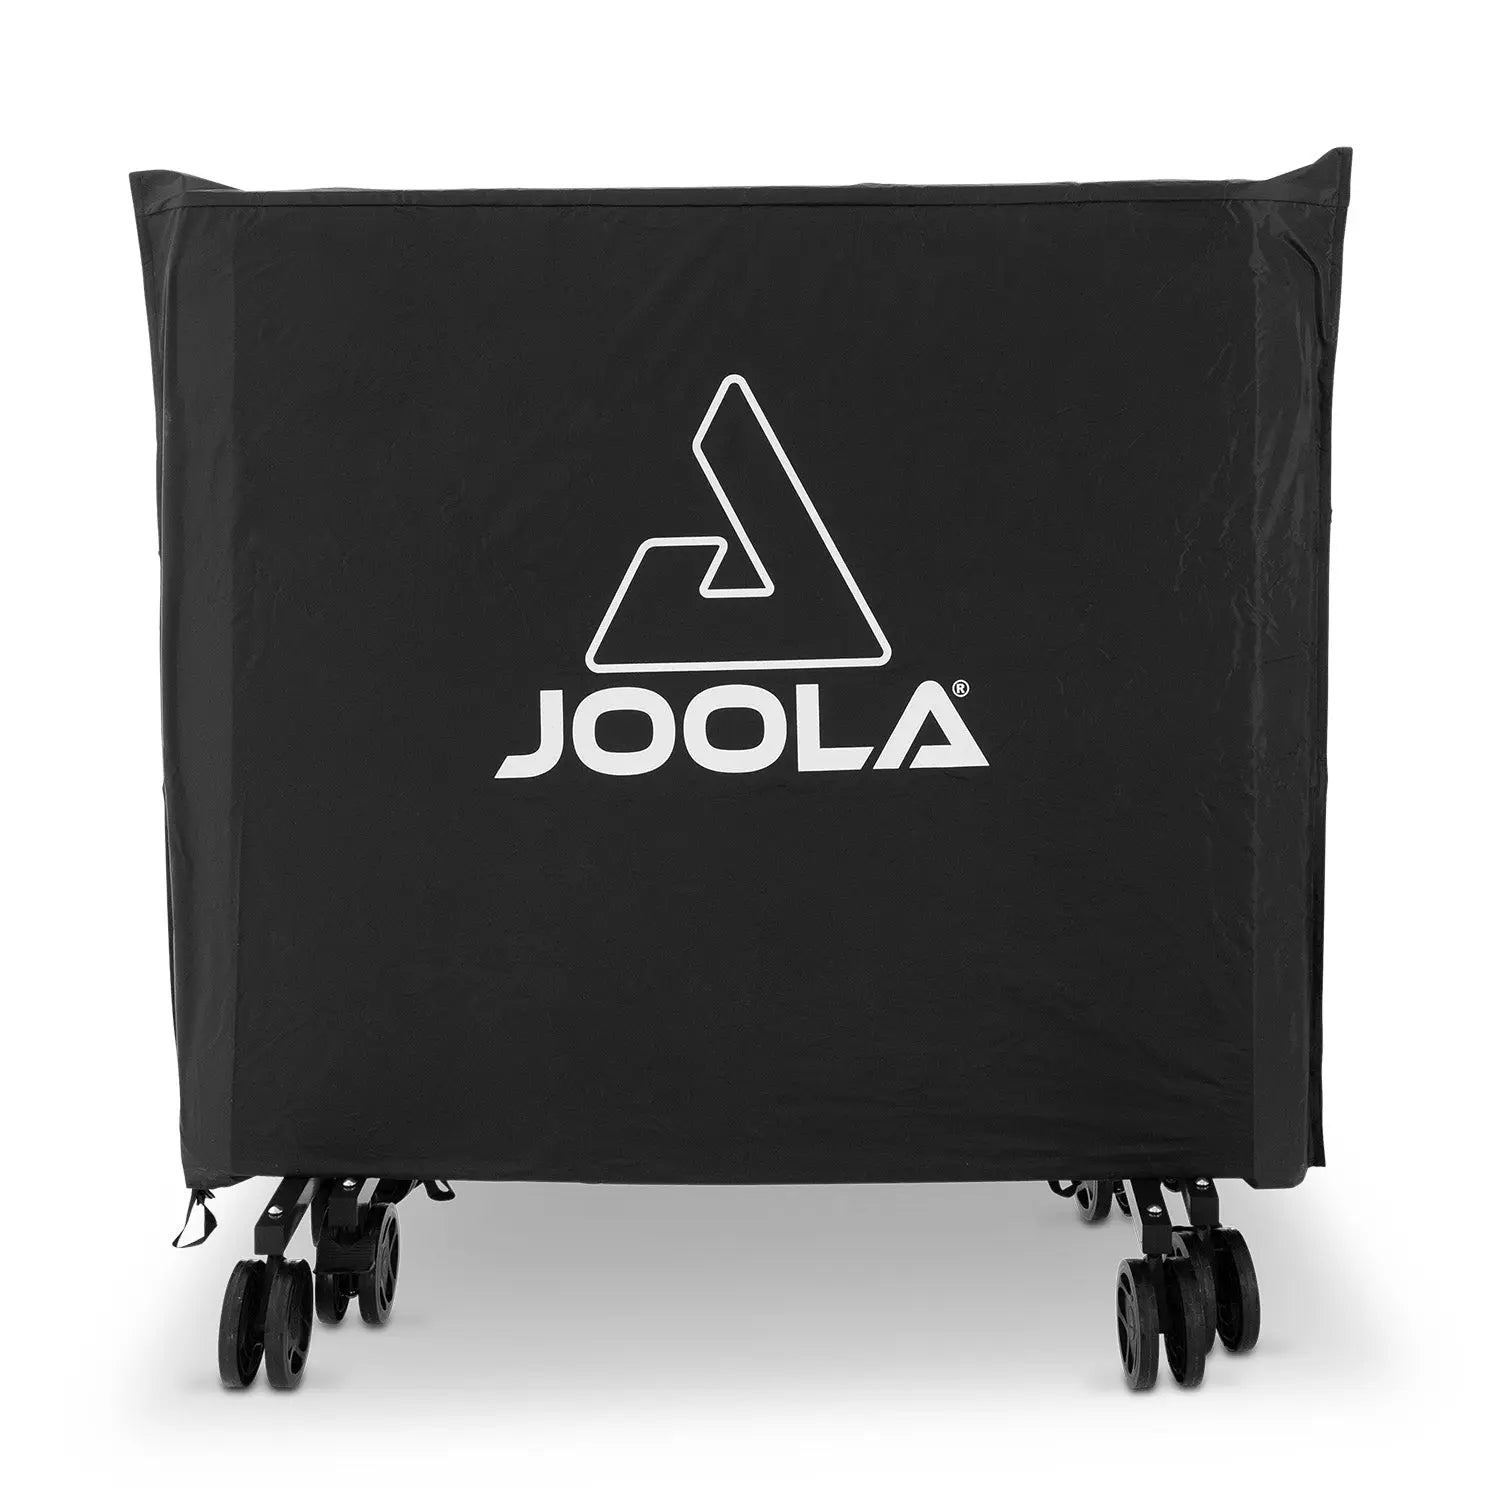 Joola Table Cover-The Racquet Shop-Shop Online in UAE, Saudi Arabia, Kuwait, Oman, Bahrain and Qatar